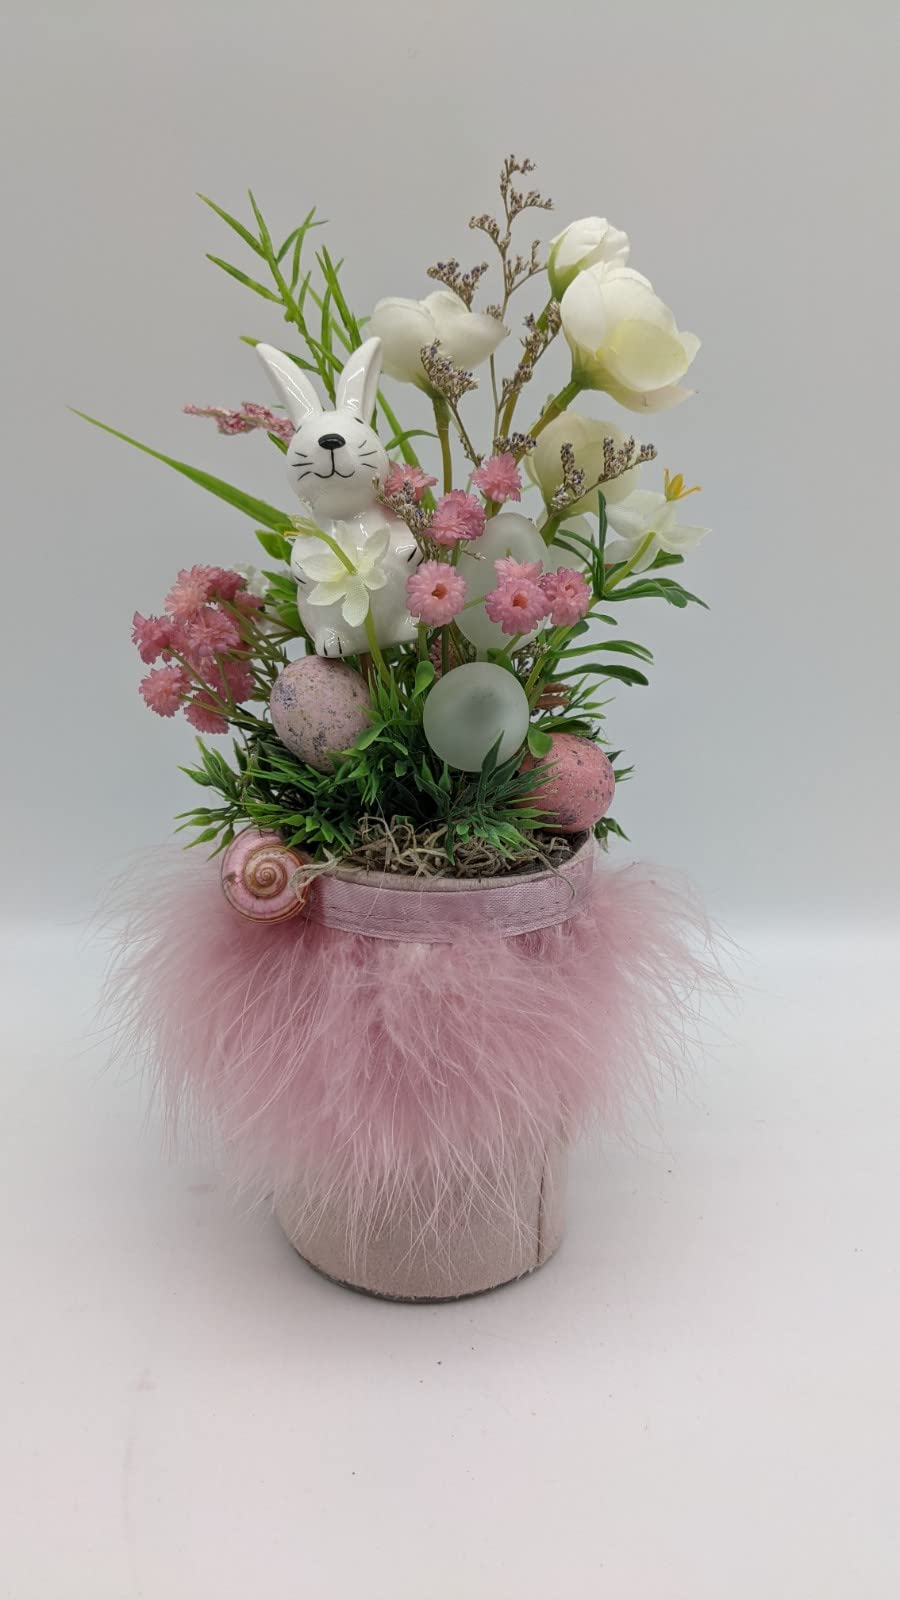 Ostergesteck Frühlingsgesteck Blumenarrangement Hase Ranunkeln Eier rosa weiß